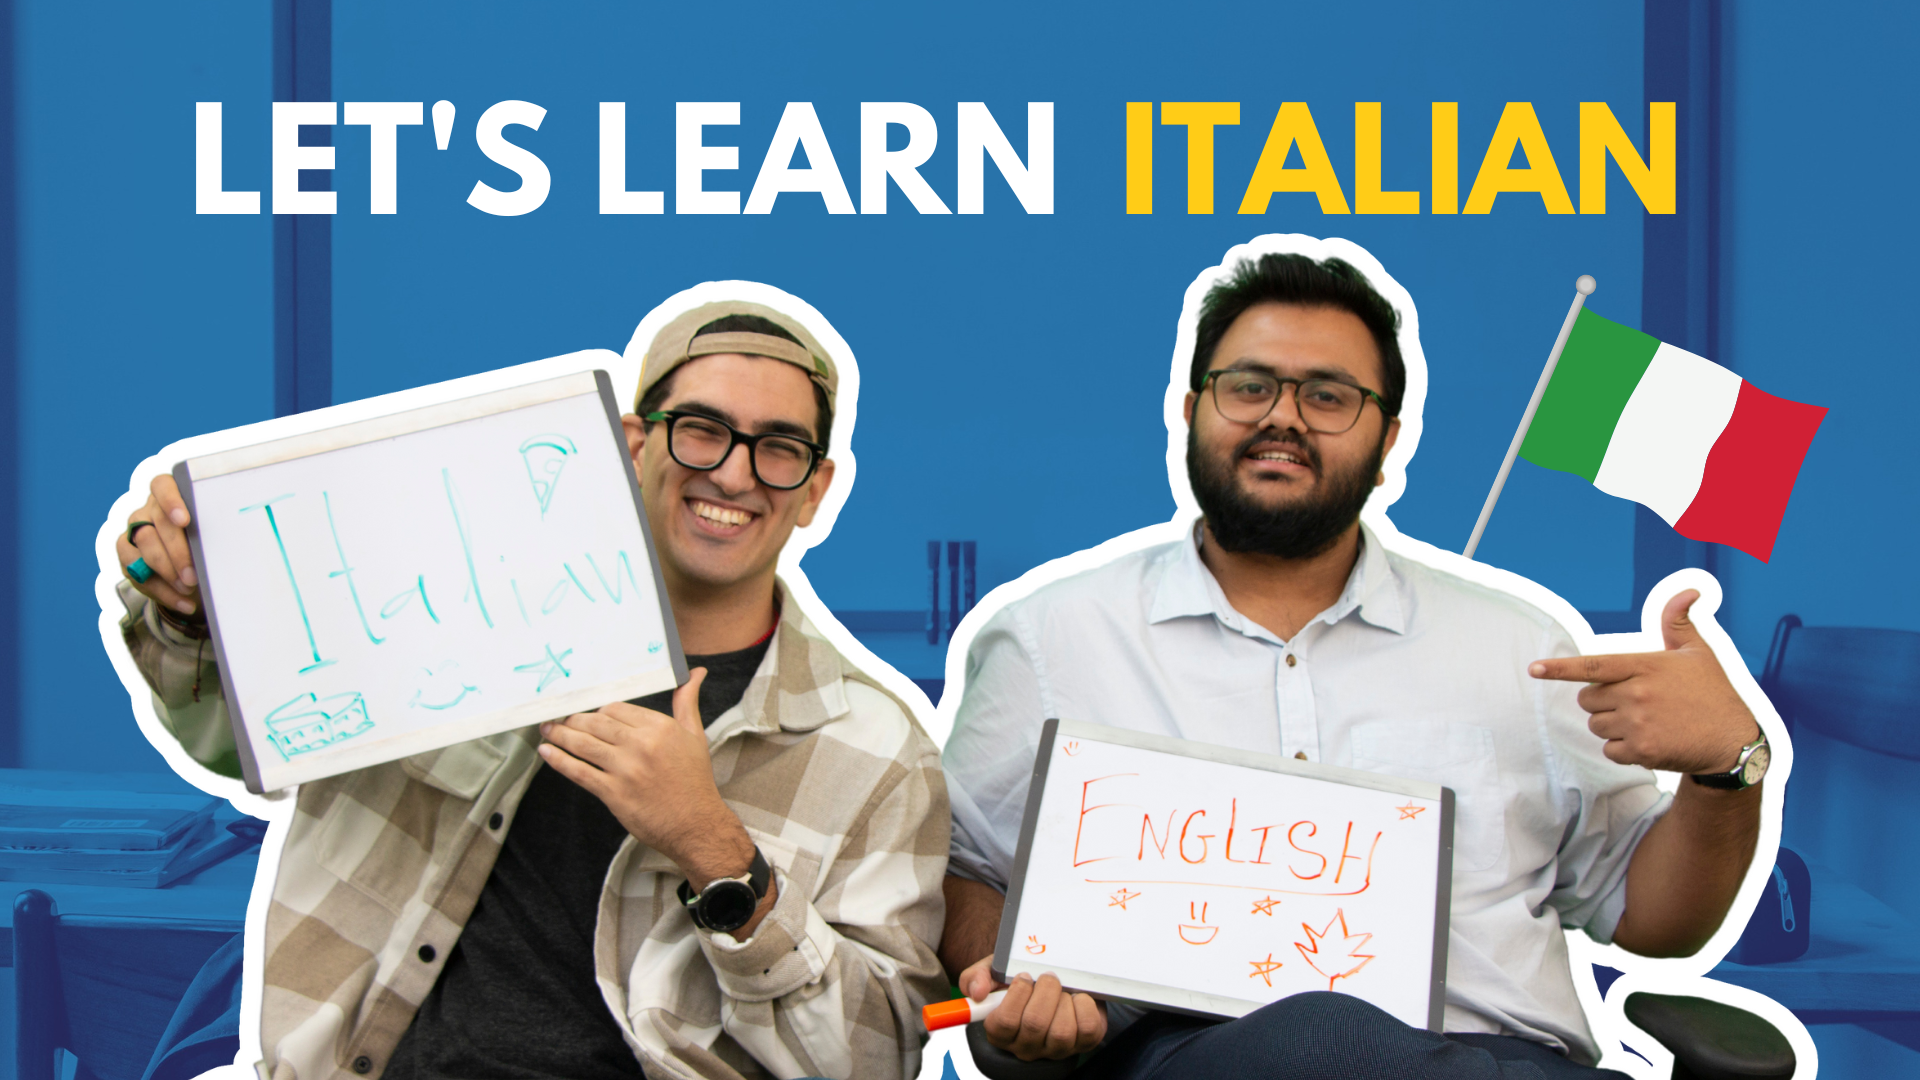 learning italian